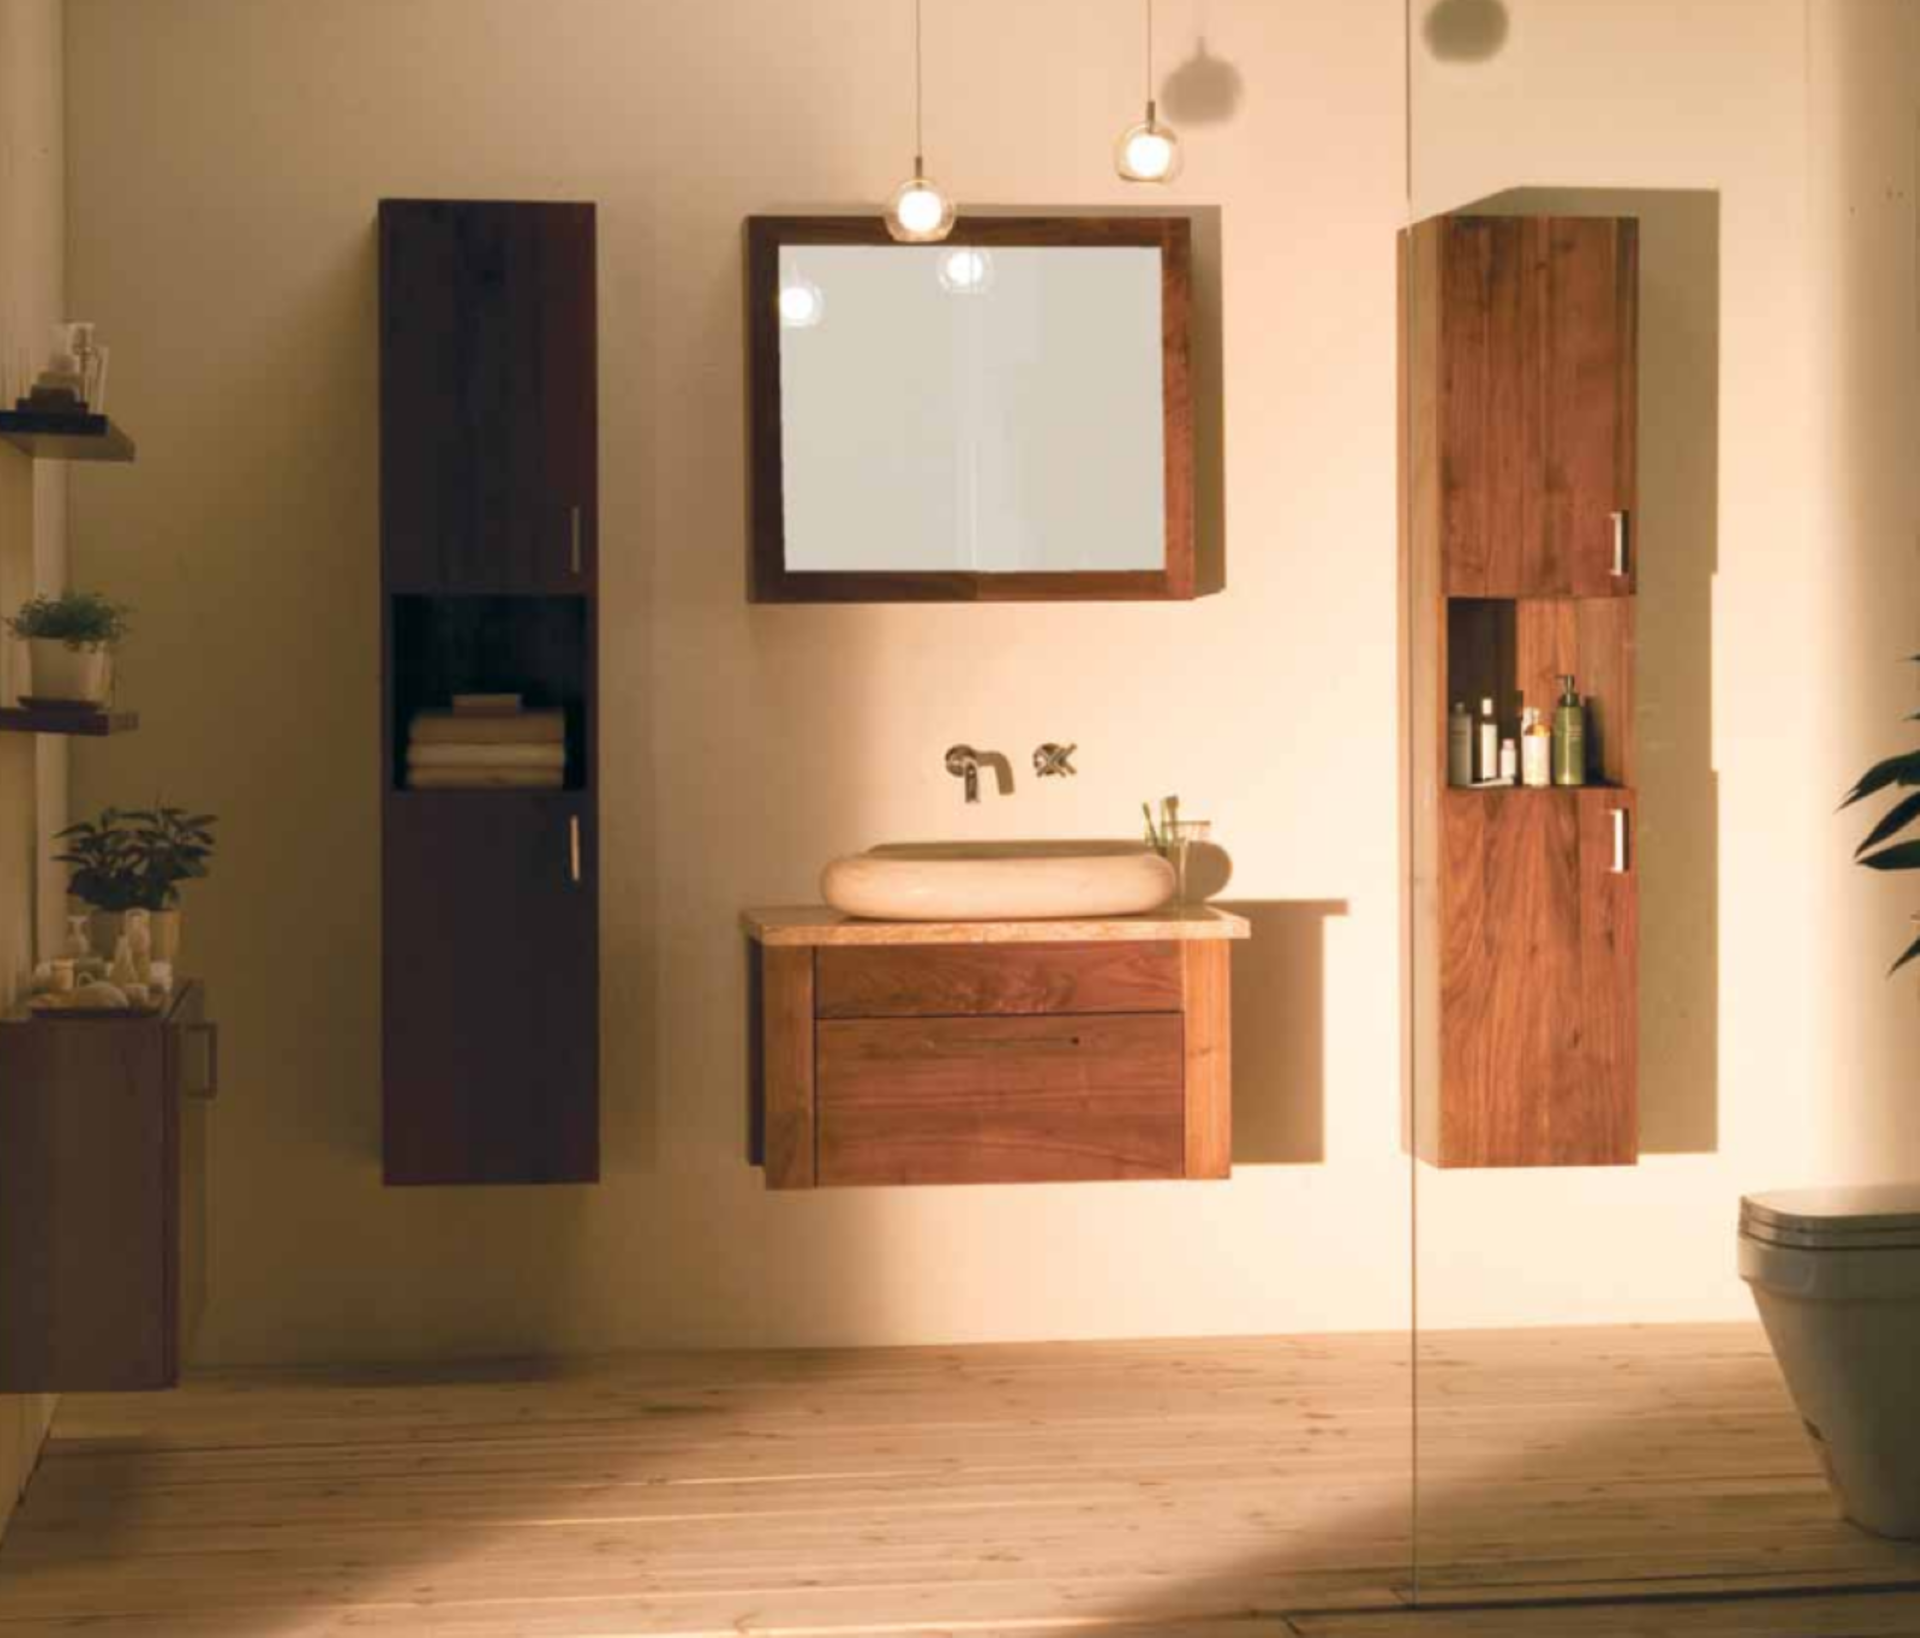 1 x Stonearth Wall Hung Tallboy Bathroom Storage Cabinet - American Solid Walnut - Original RRP £996 - Image 9 of 16